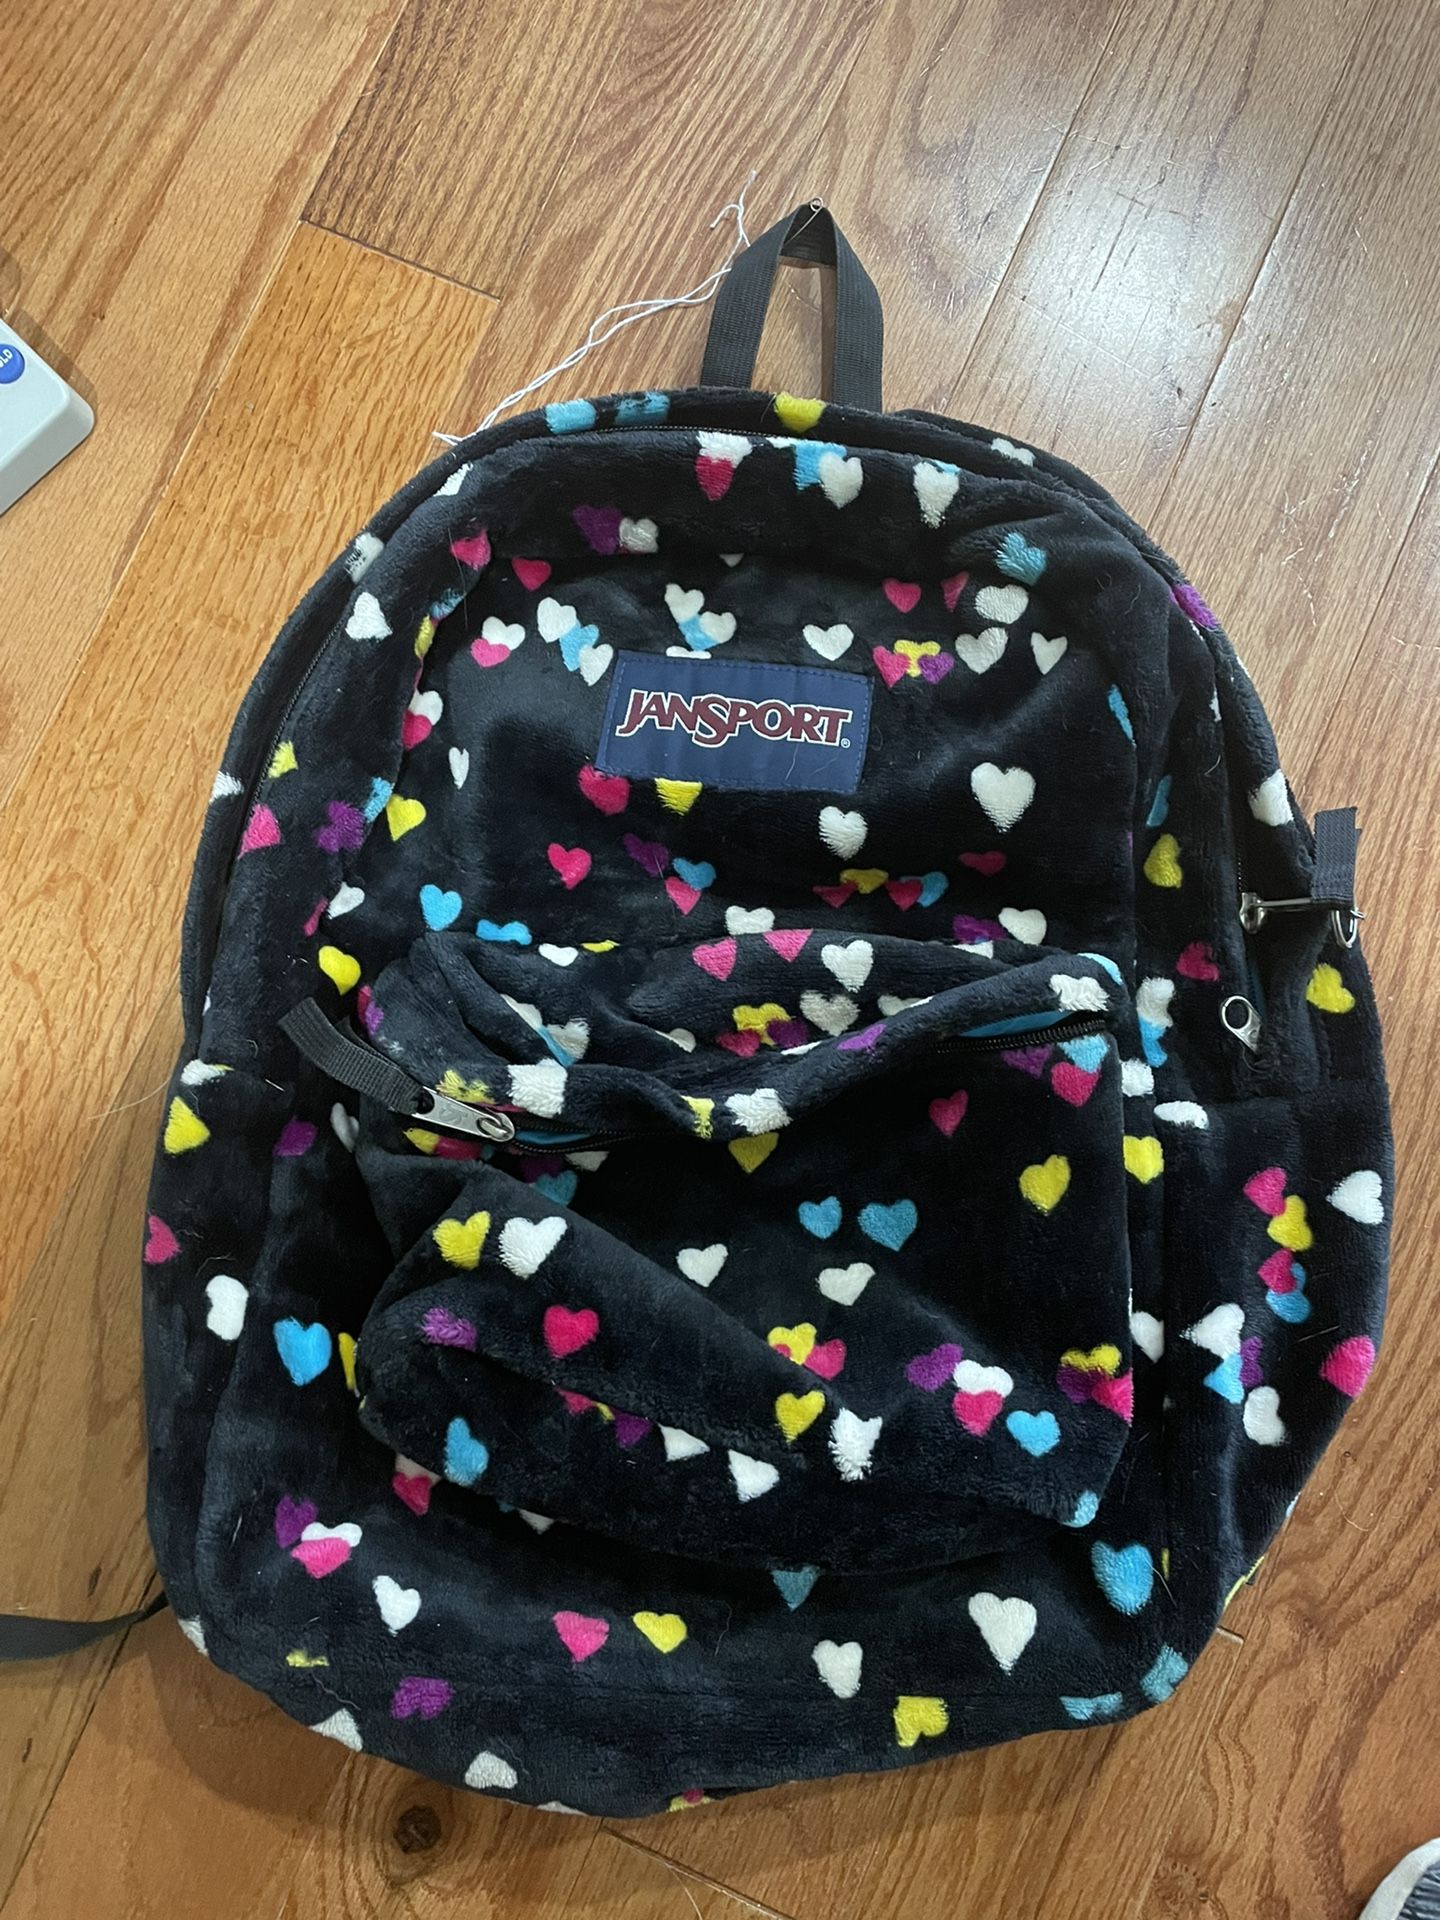 jansport backpack Black with Hearts